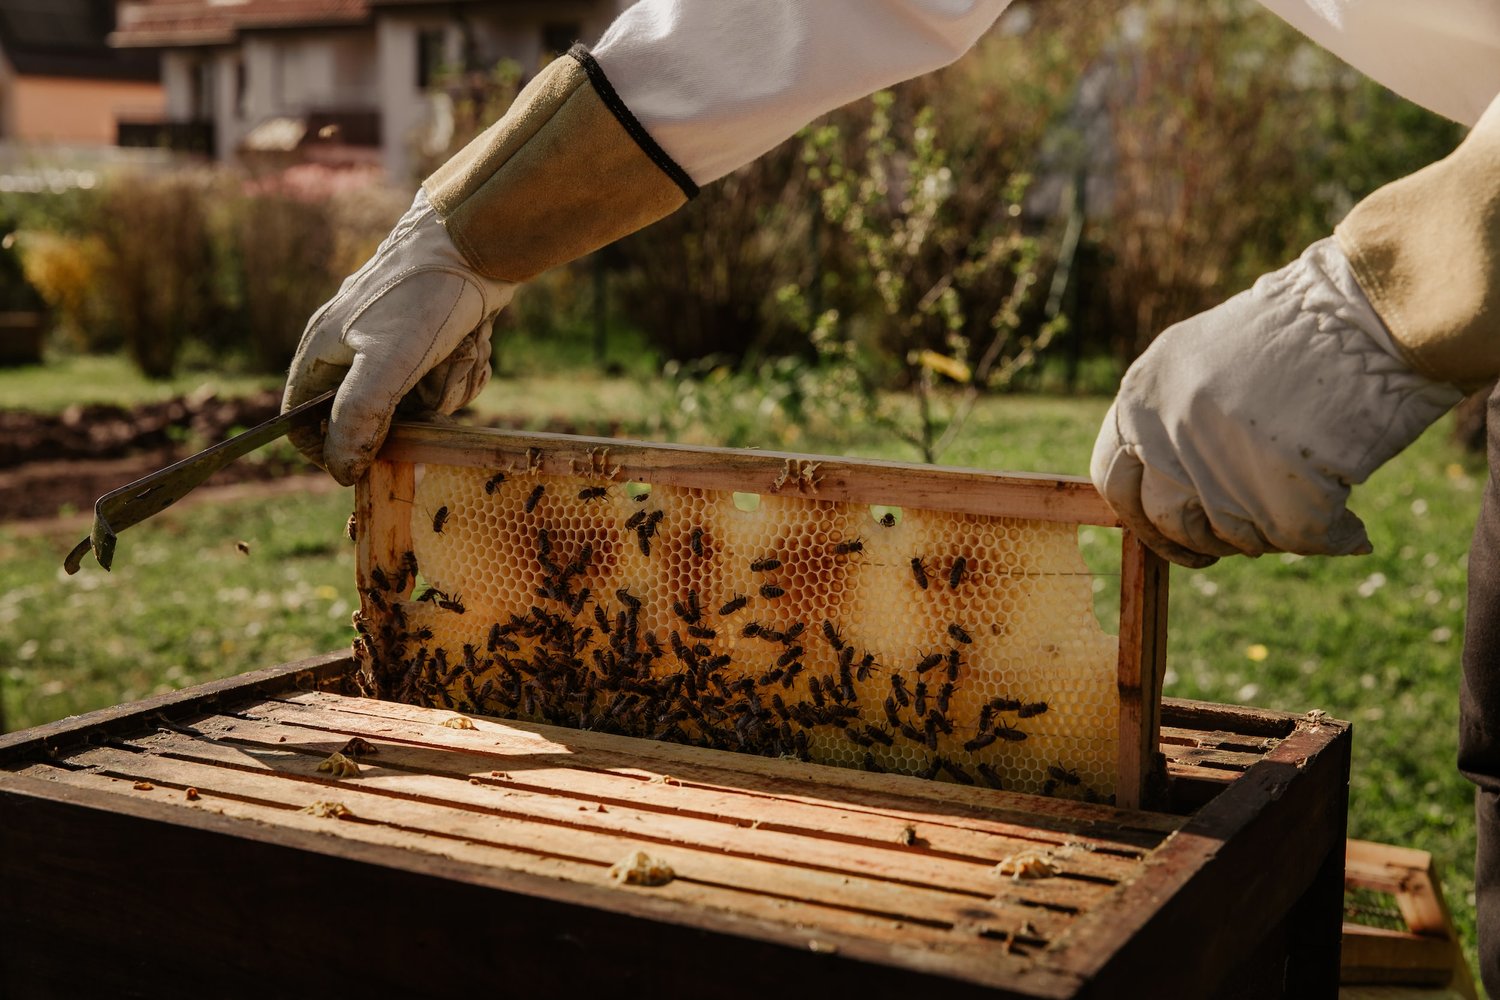 beekeeper working in the beehive